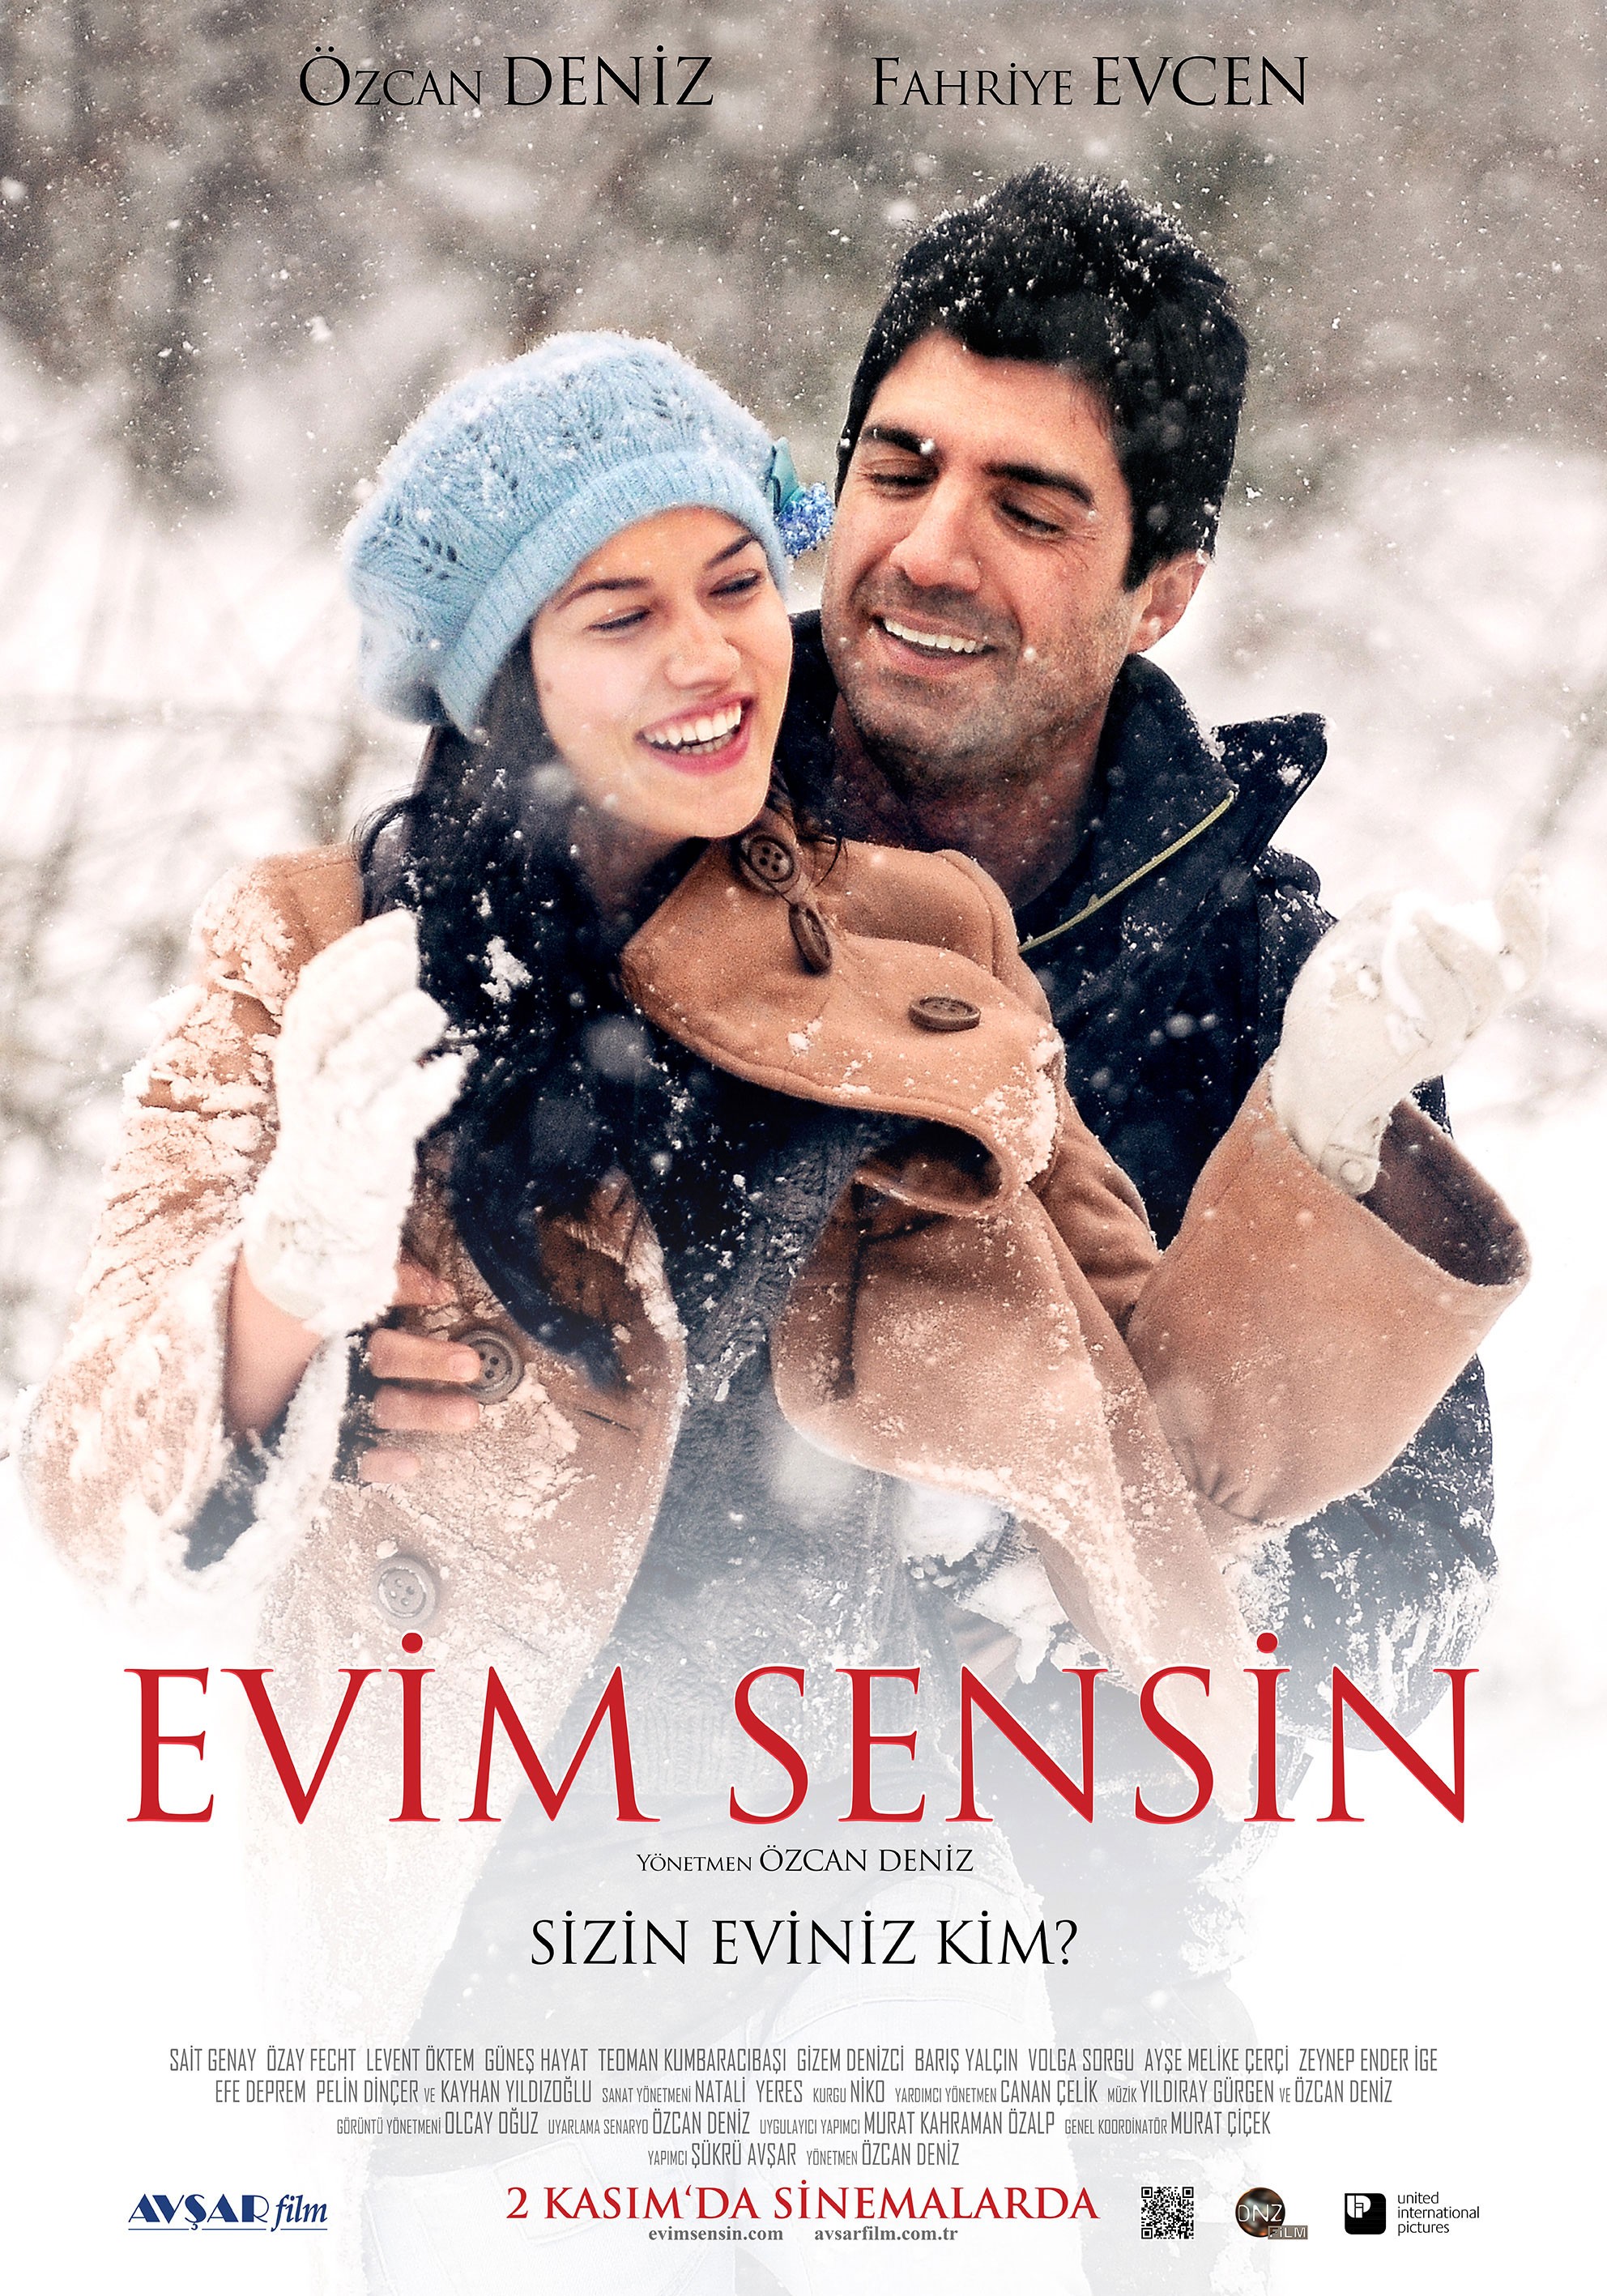 Mega Sized Movie Poster Image for Evim Sensin 